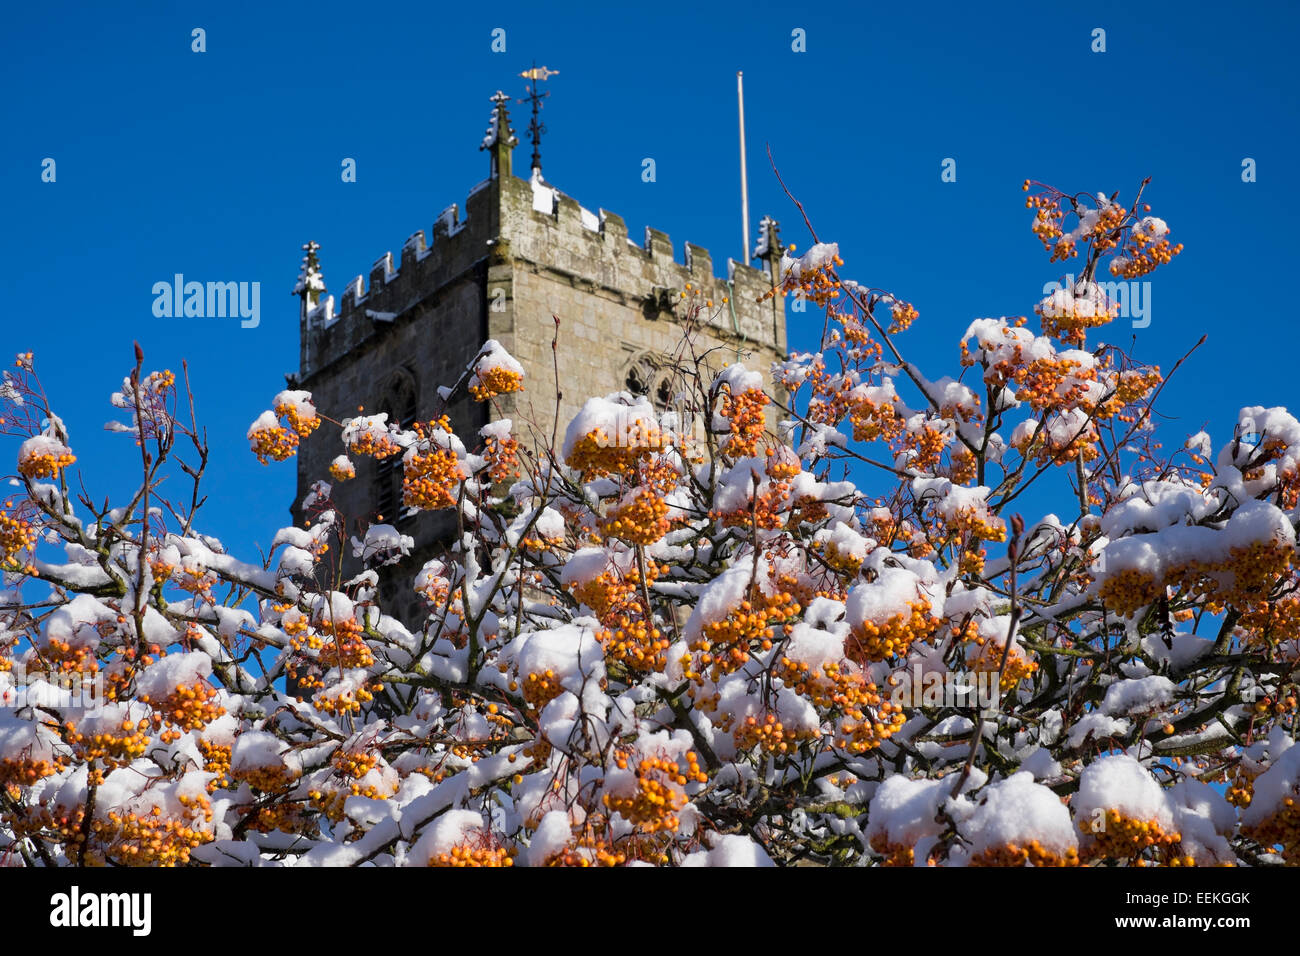 St Laurence's Church in winter, Church Stretton, Shropshire, England. Stock Photo